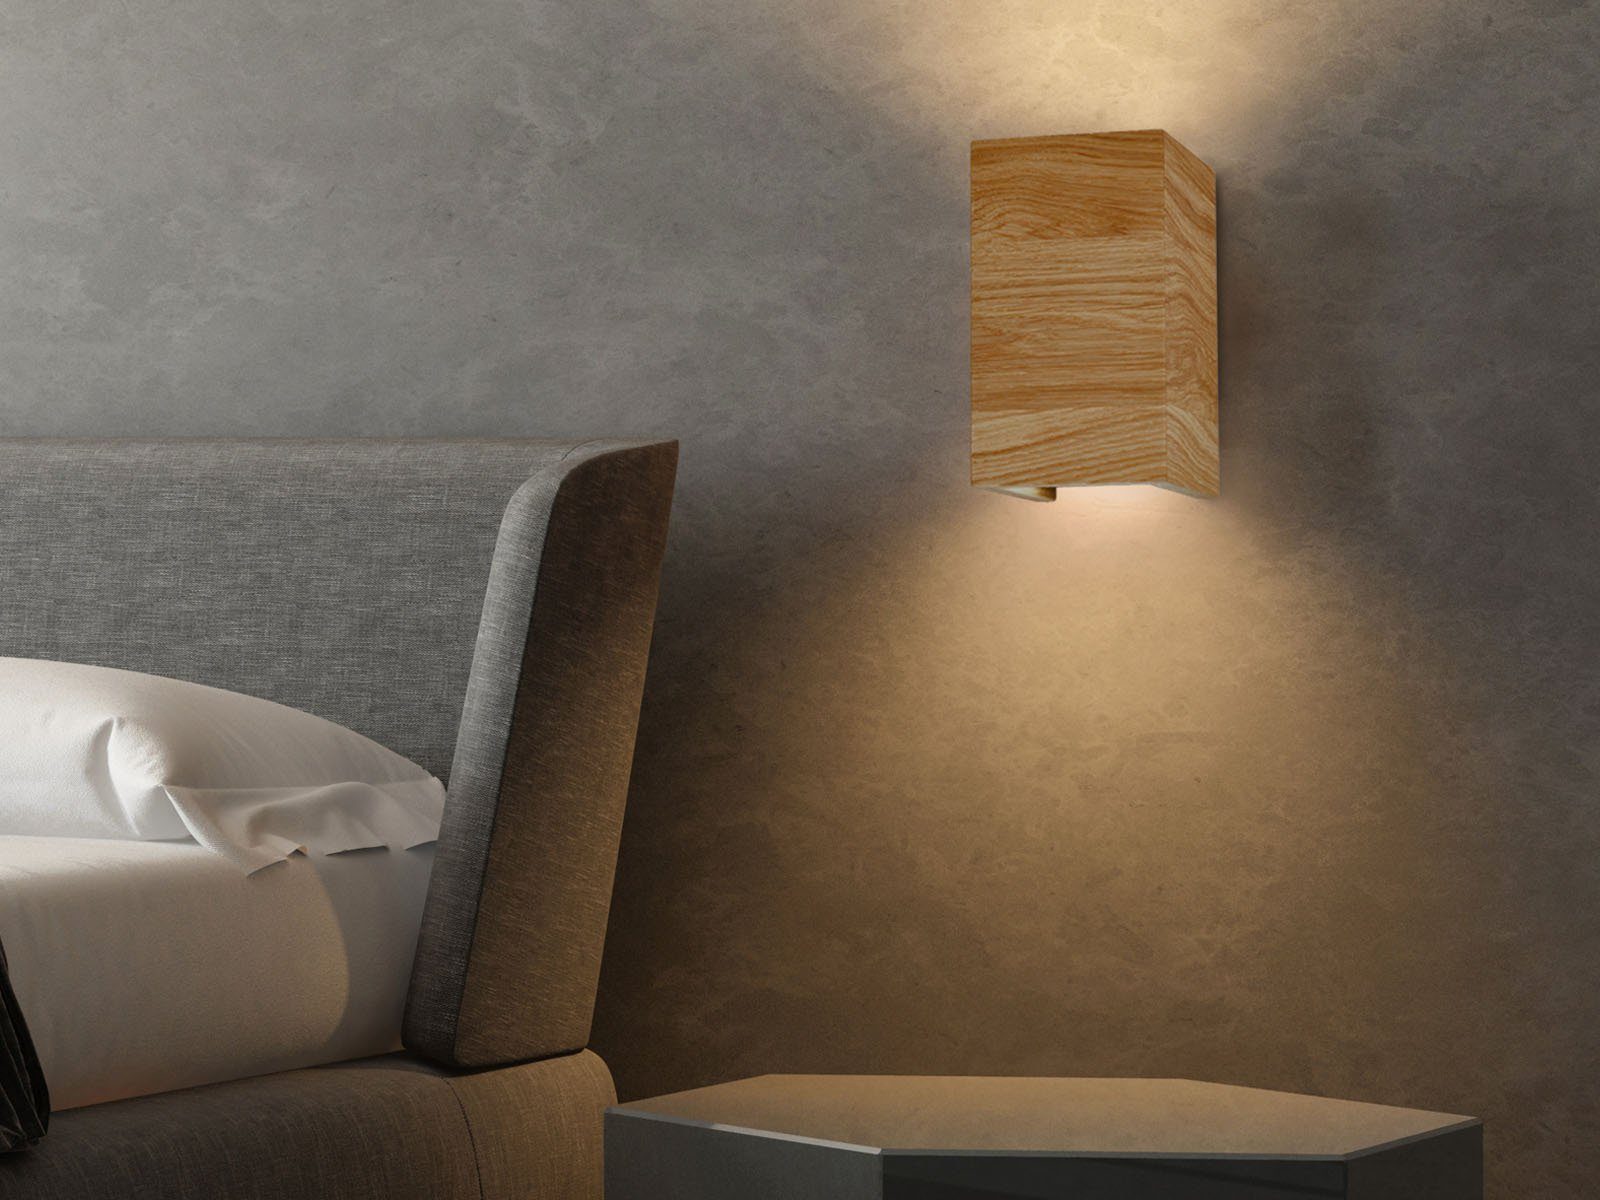 Holz-Lampen 10cm 2er Wandleuchte, LED meineWunschleuchte Wand-Beleuchtung wechselbar, indirekte Warmweiß, breit, SET LED innen